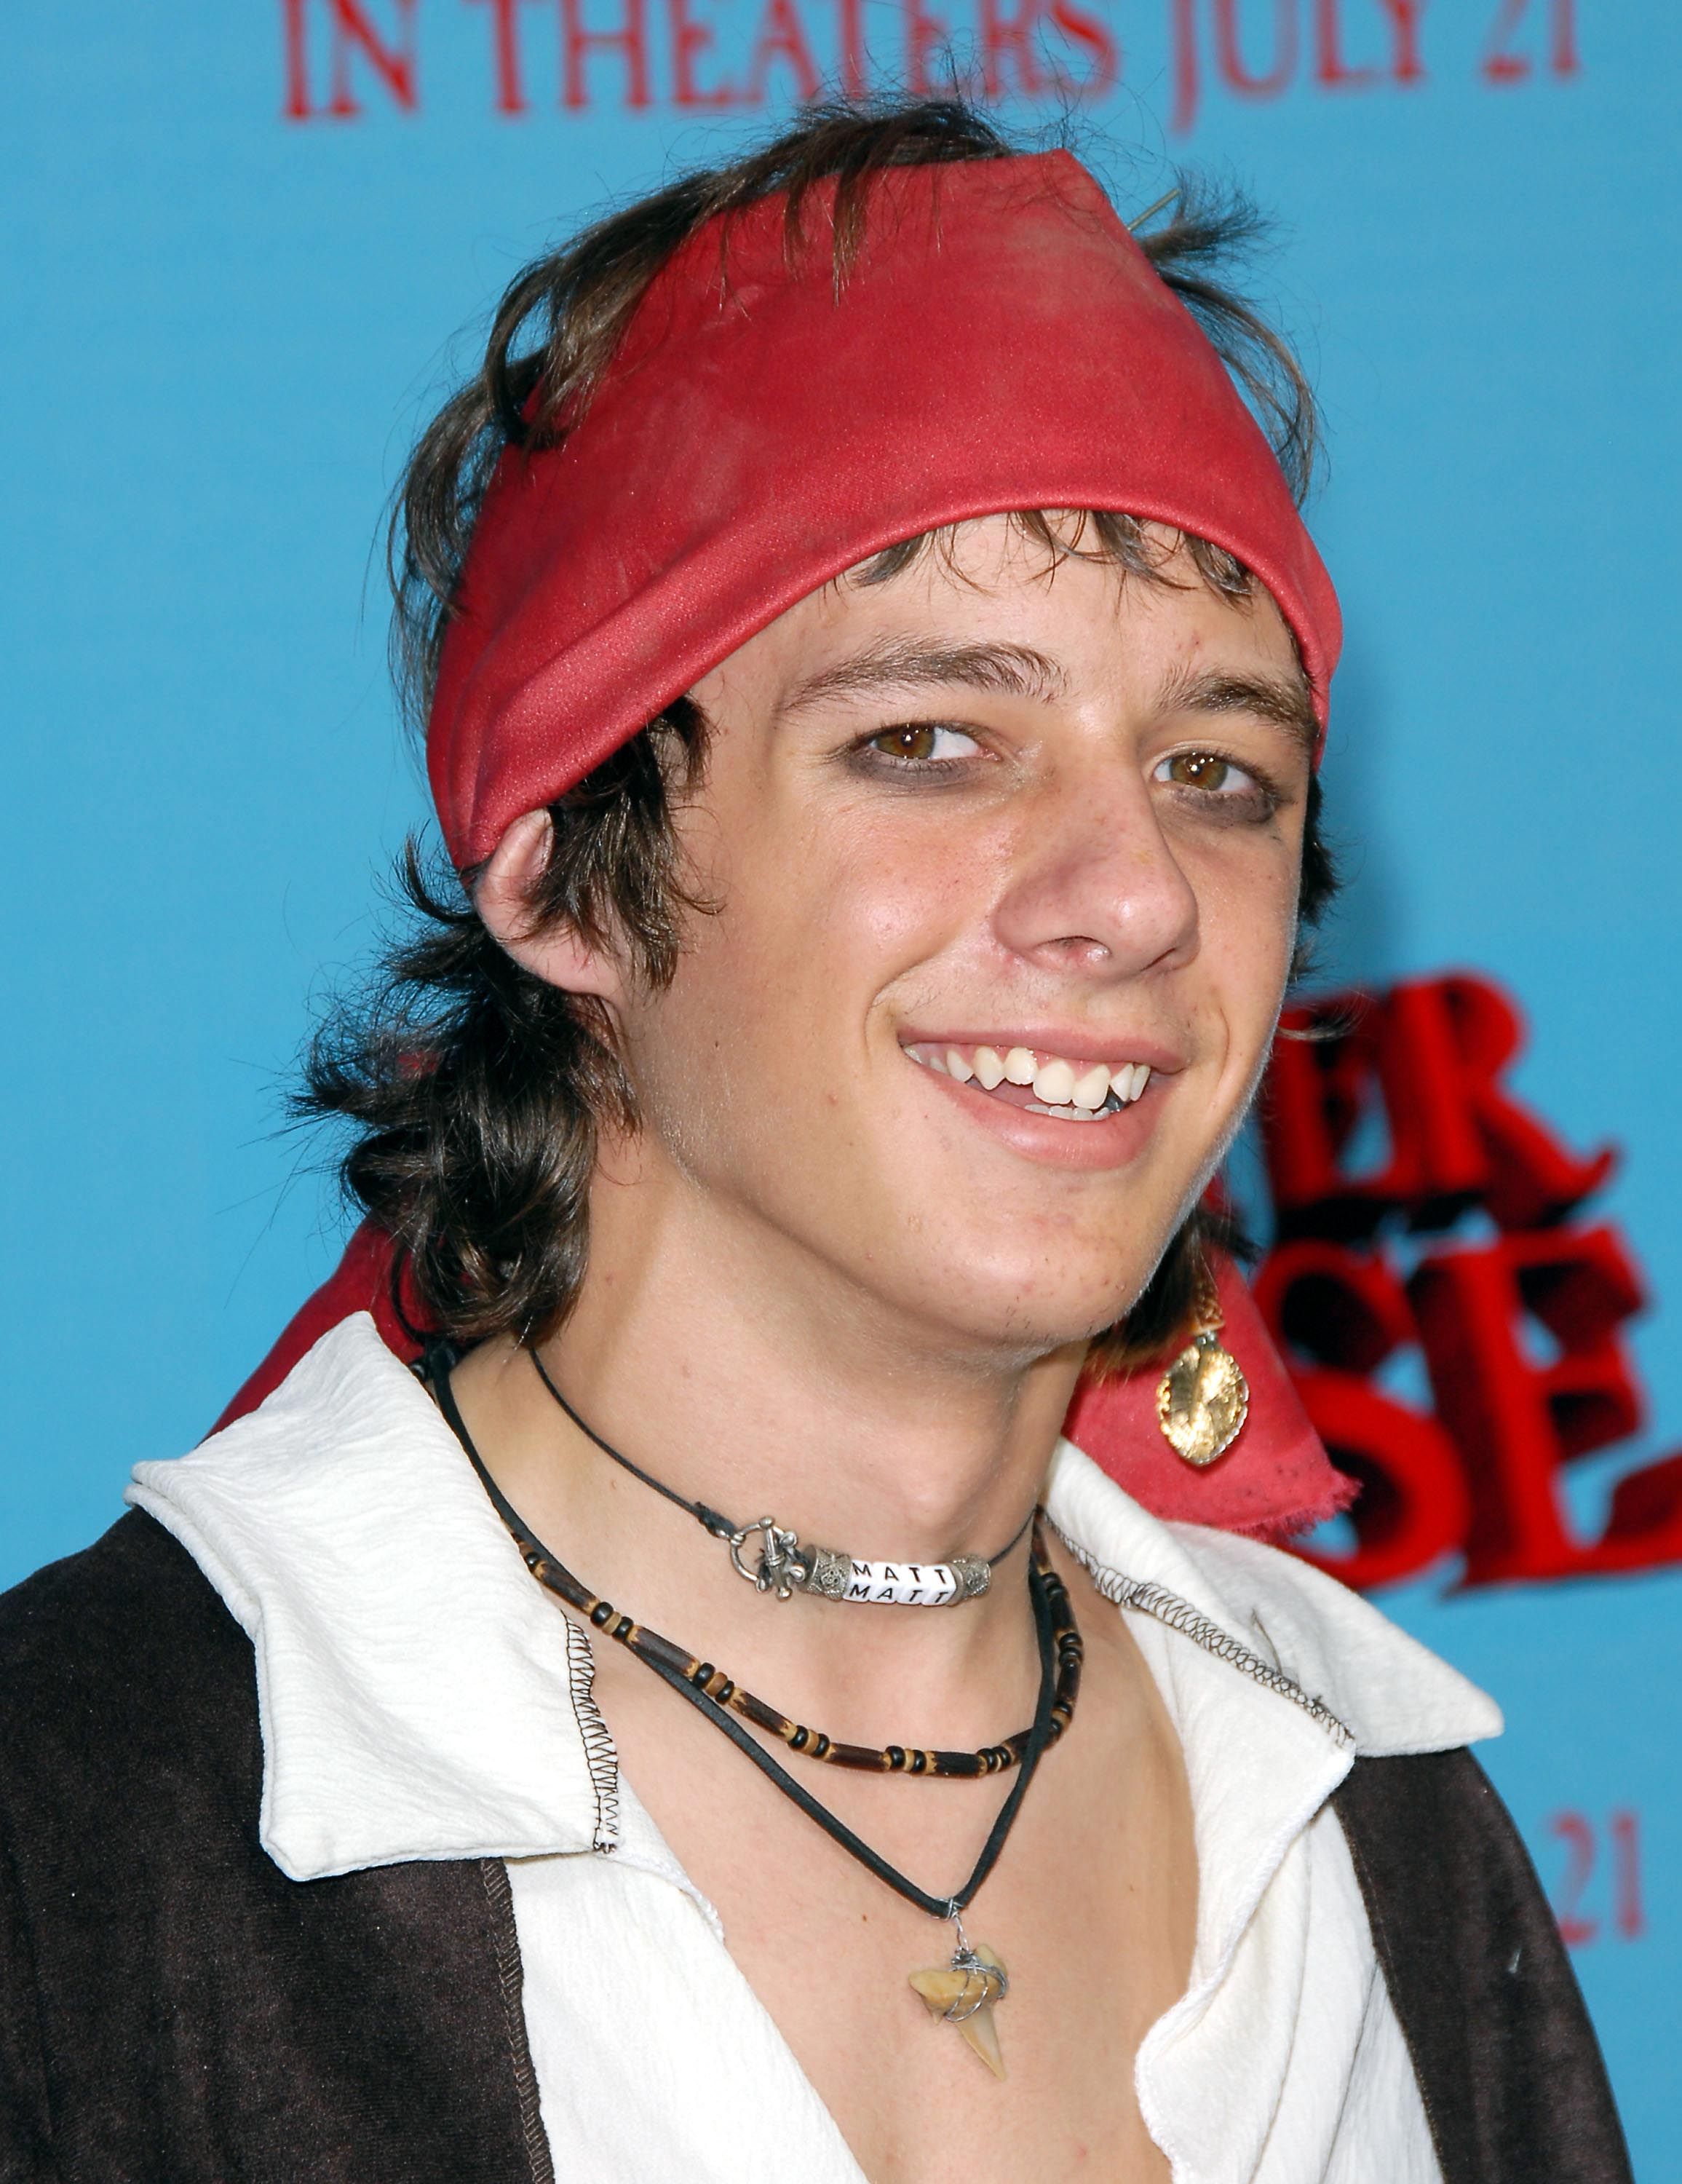 Matthew Underwood dressed as a pirate